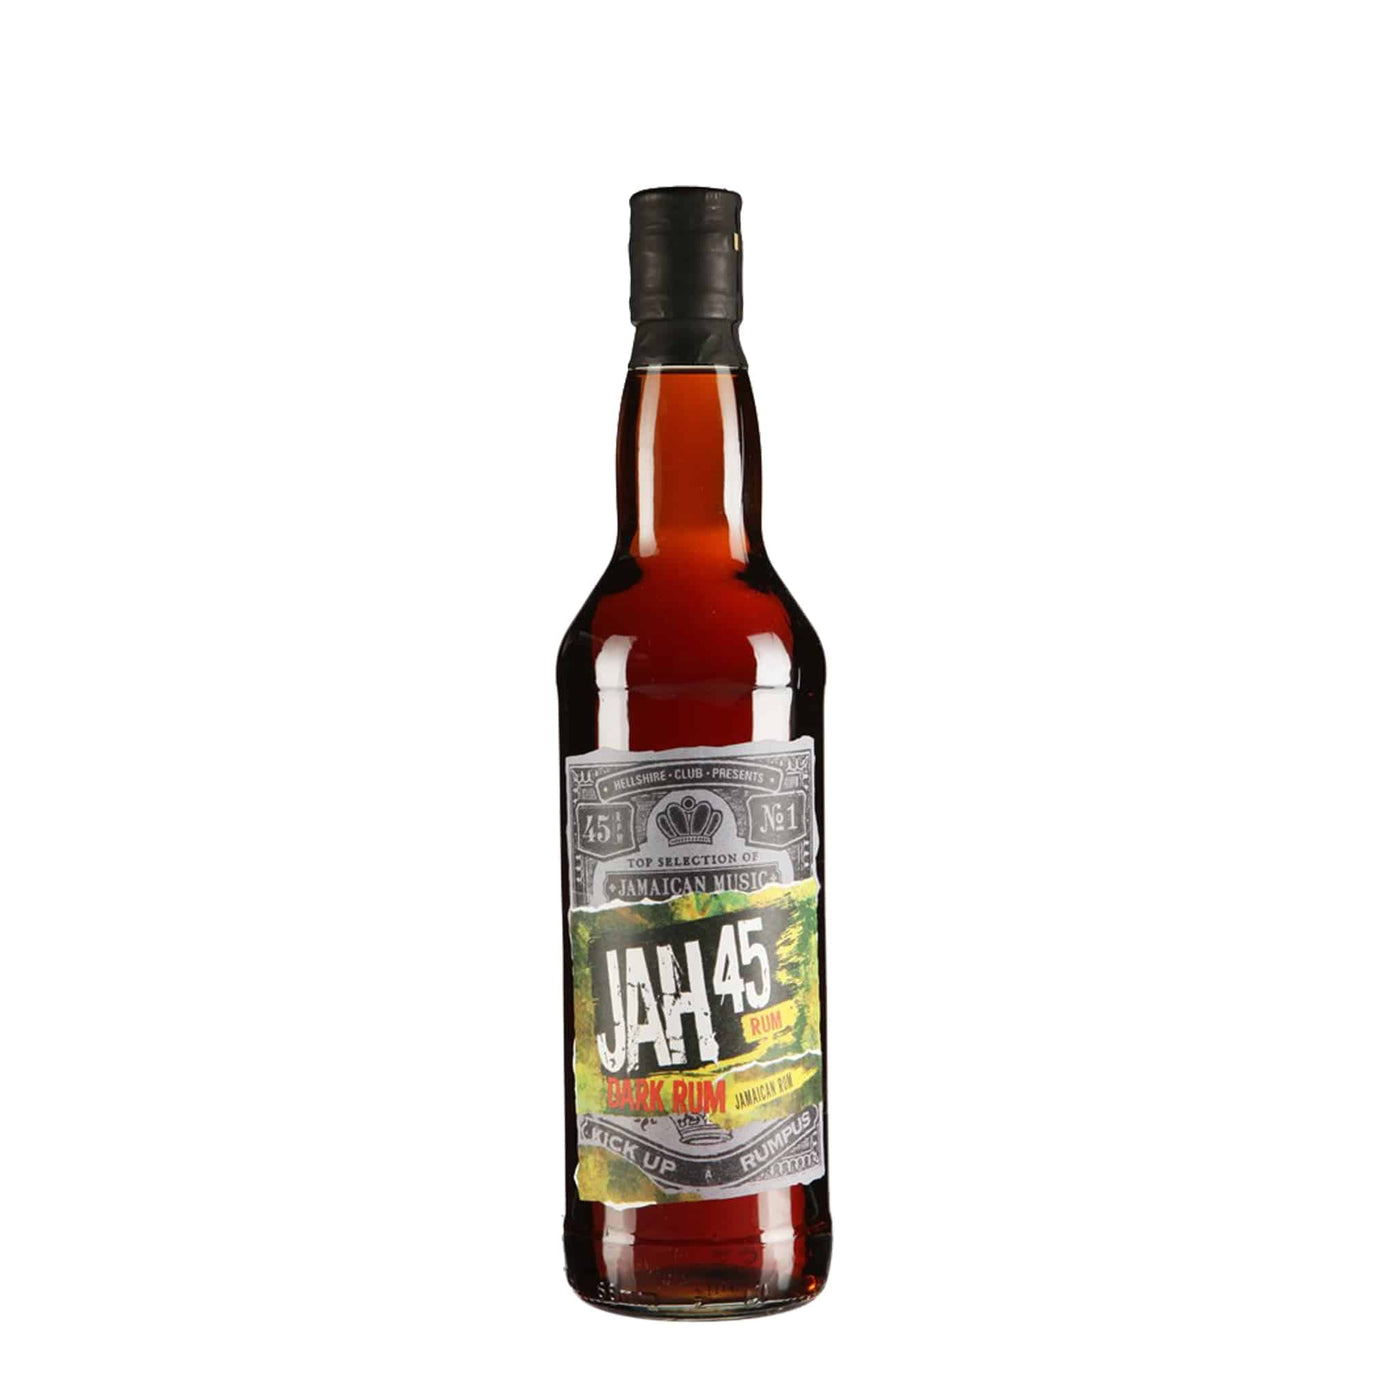 JAH45 Dark Rum - Spiritly